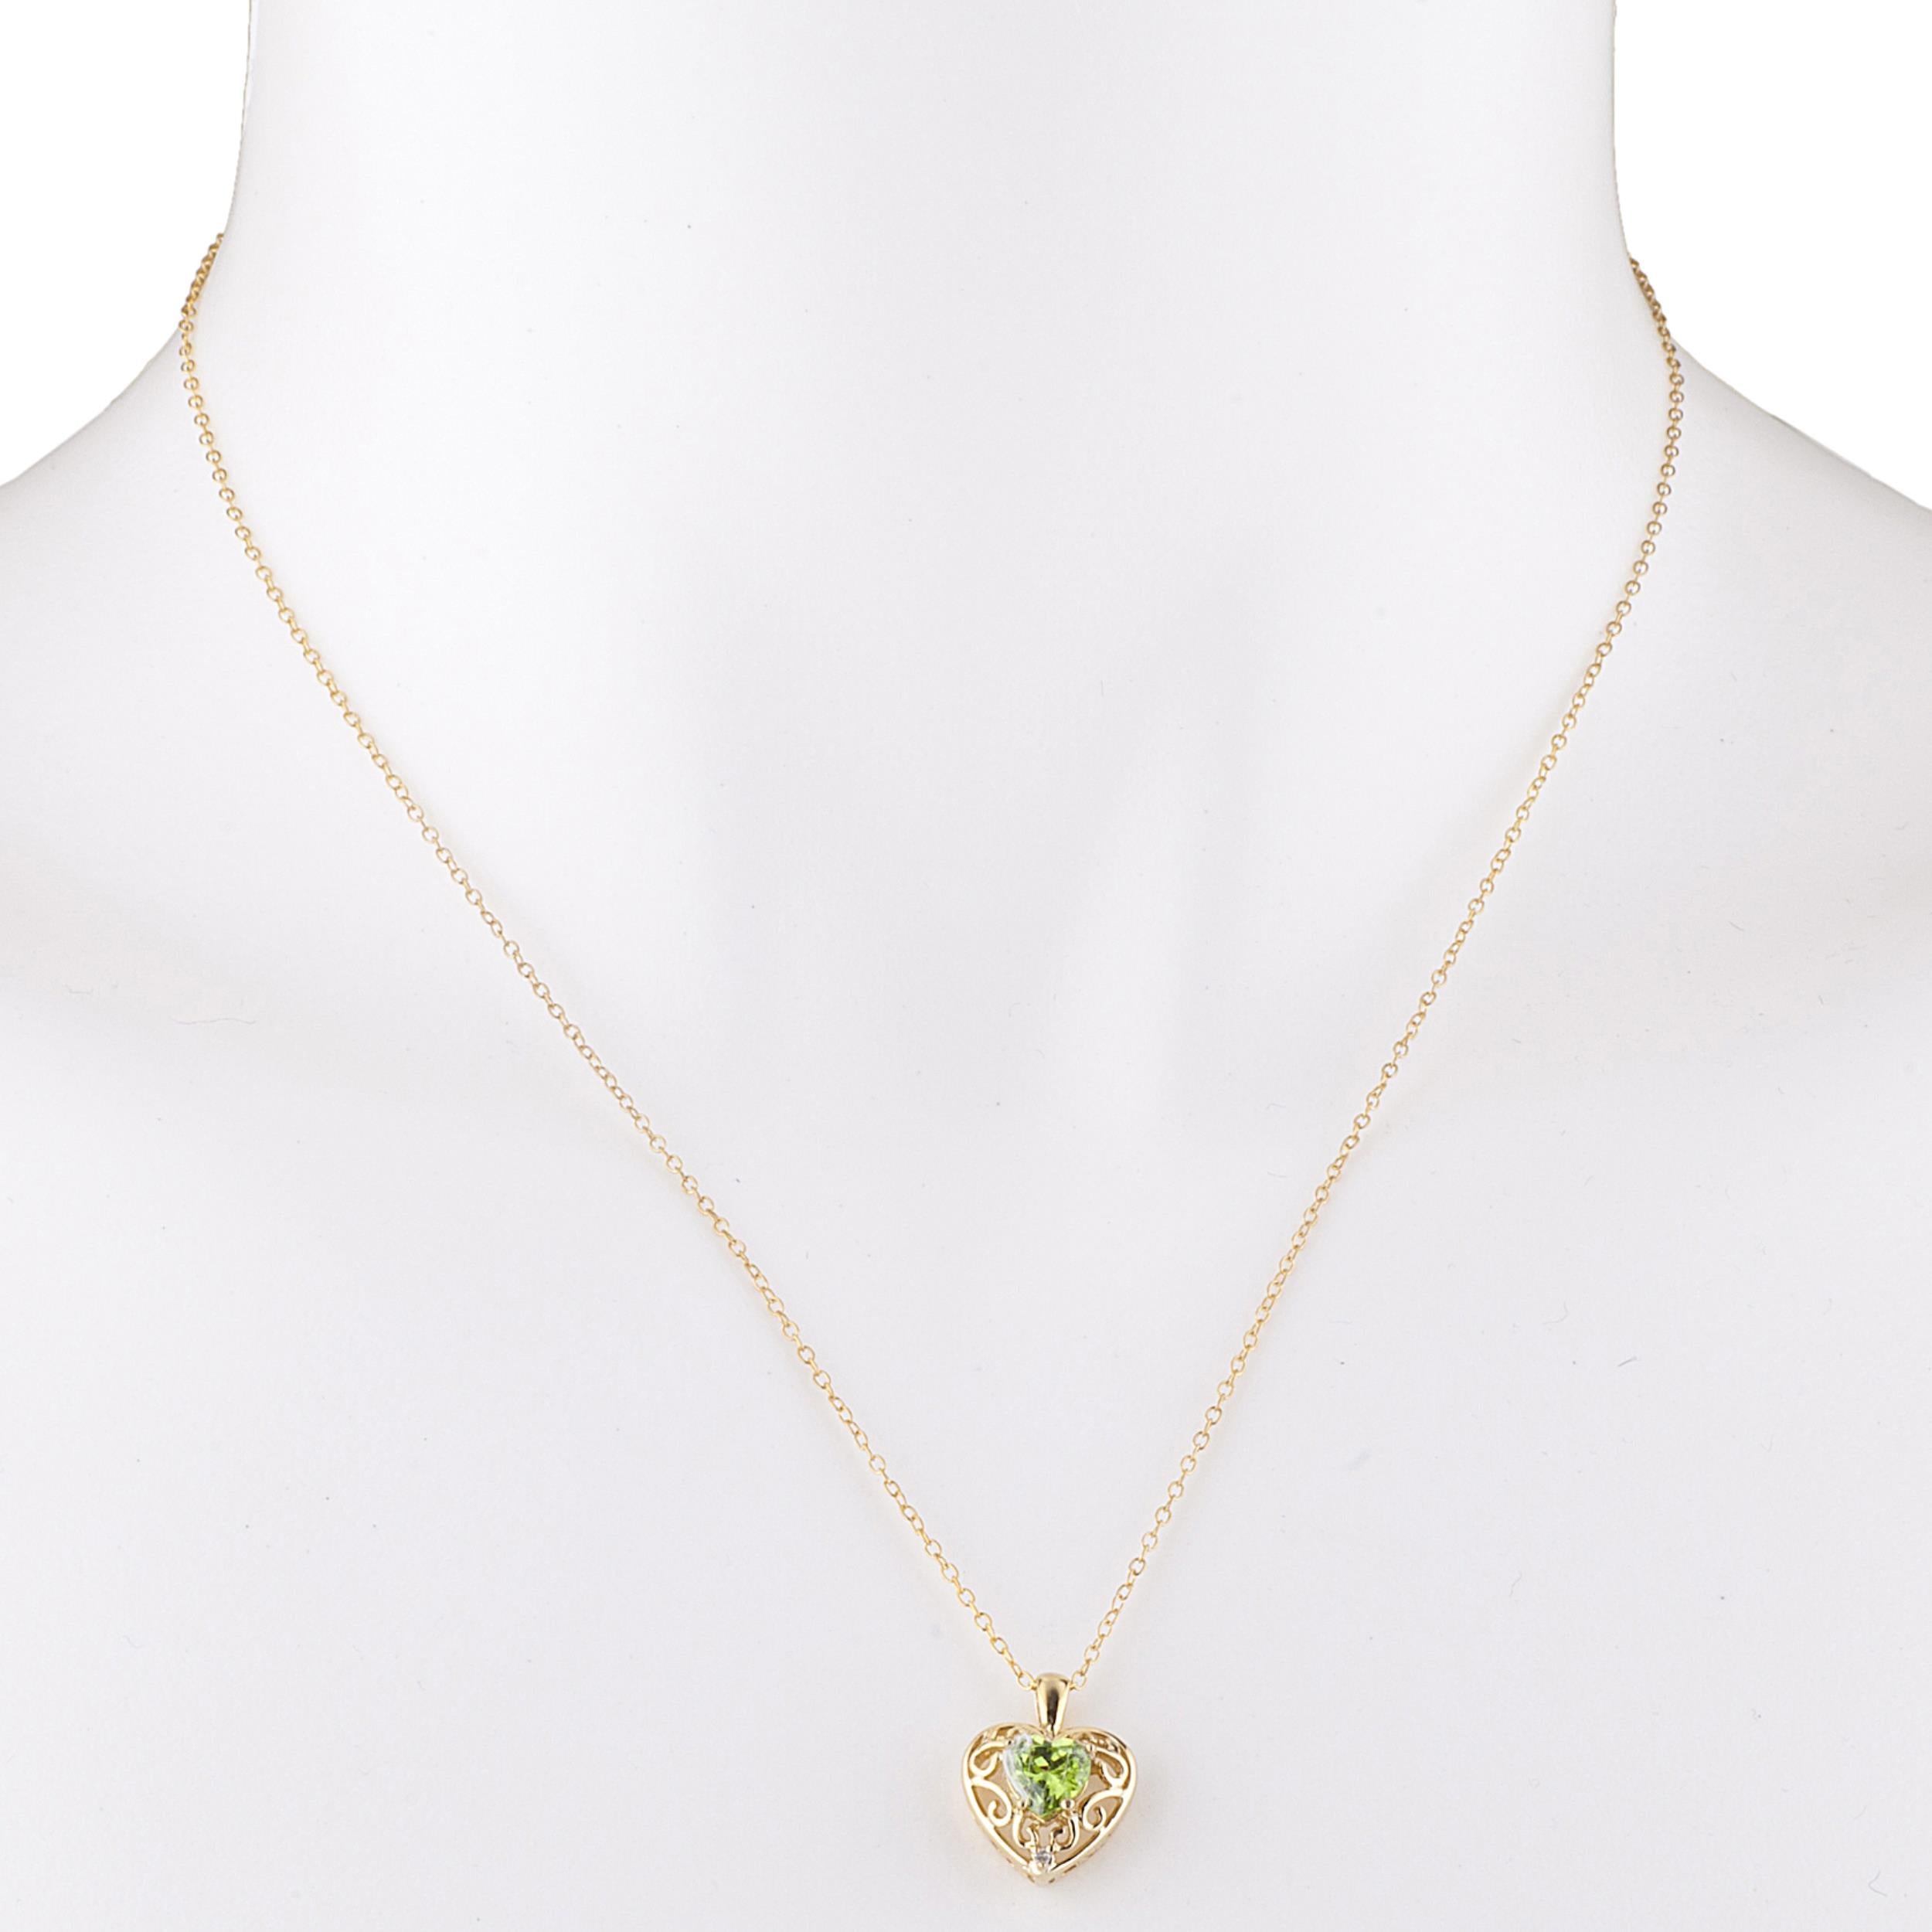 14Kt Gold Peridot & Diamond Heart LOVE ENGRAVED Pendant Necklace